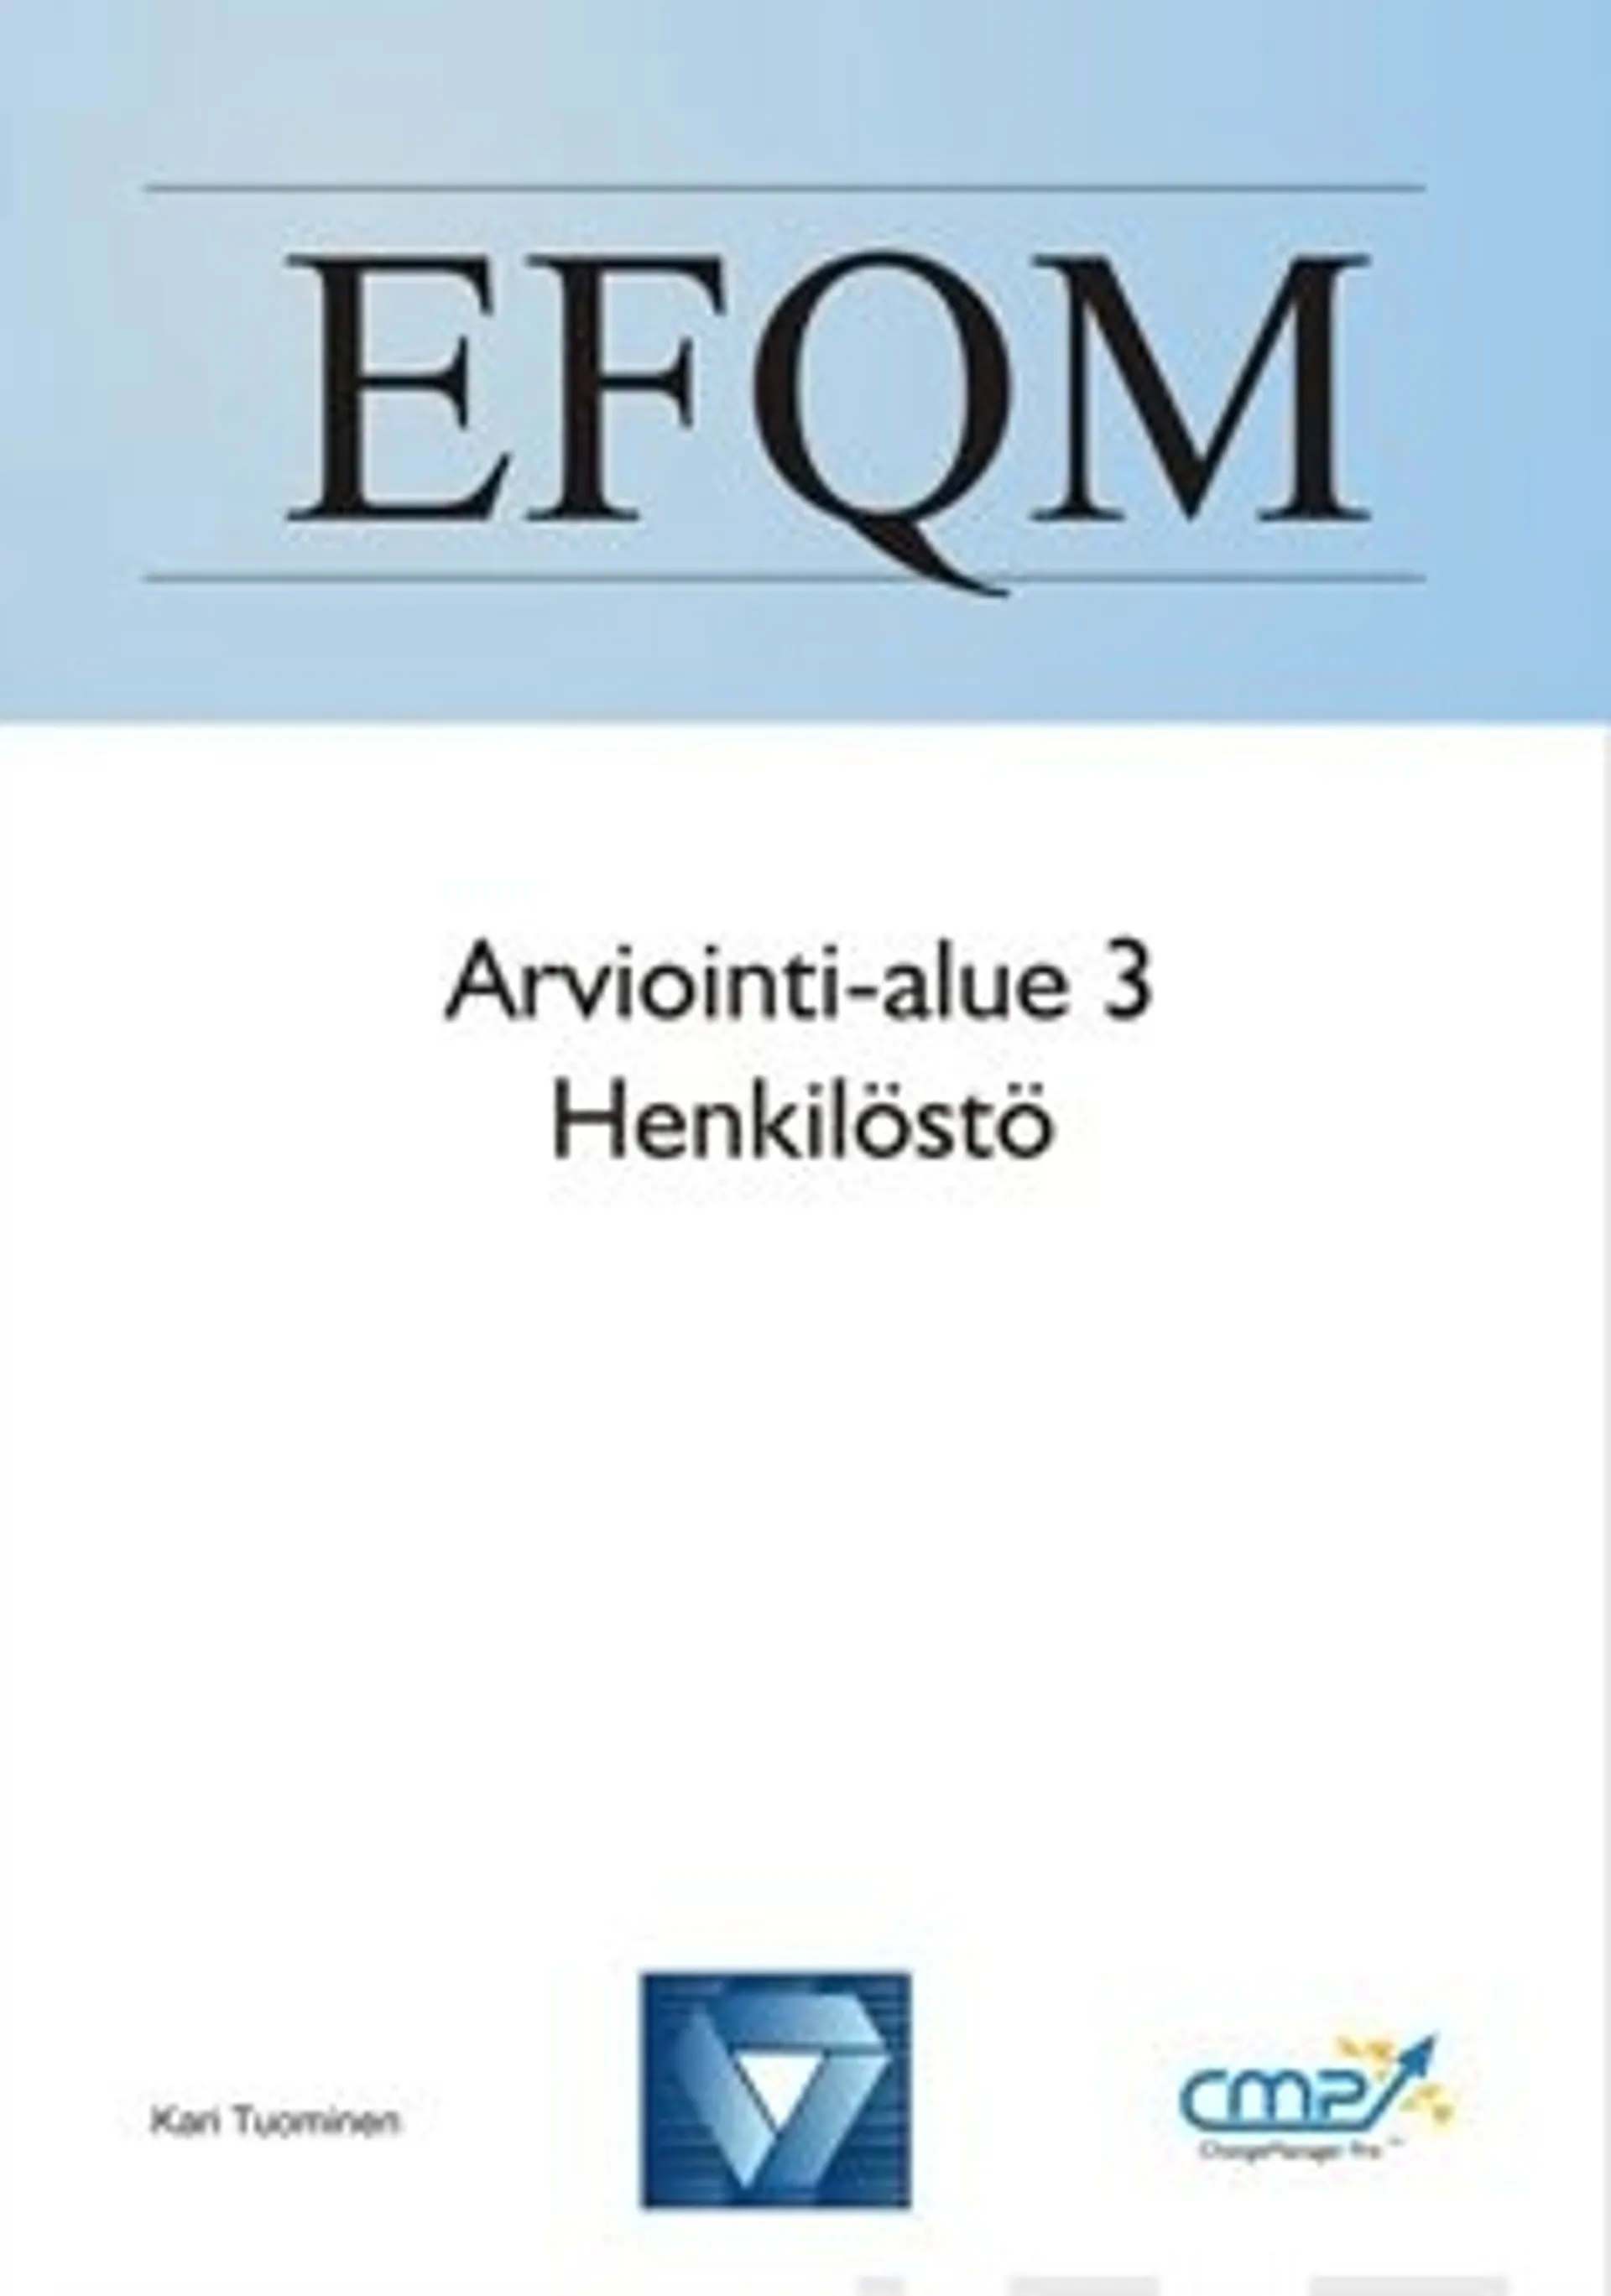 EFQM - arviointialue 3